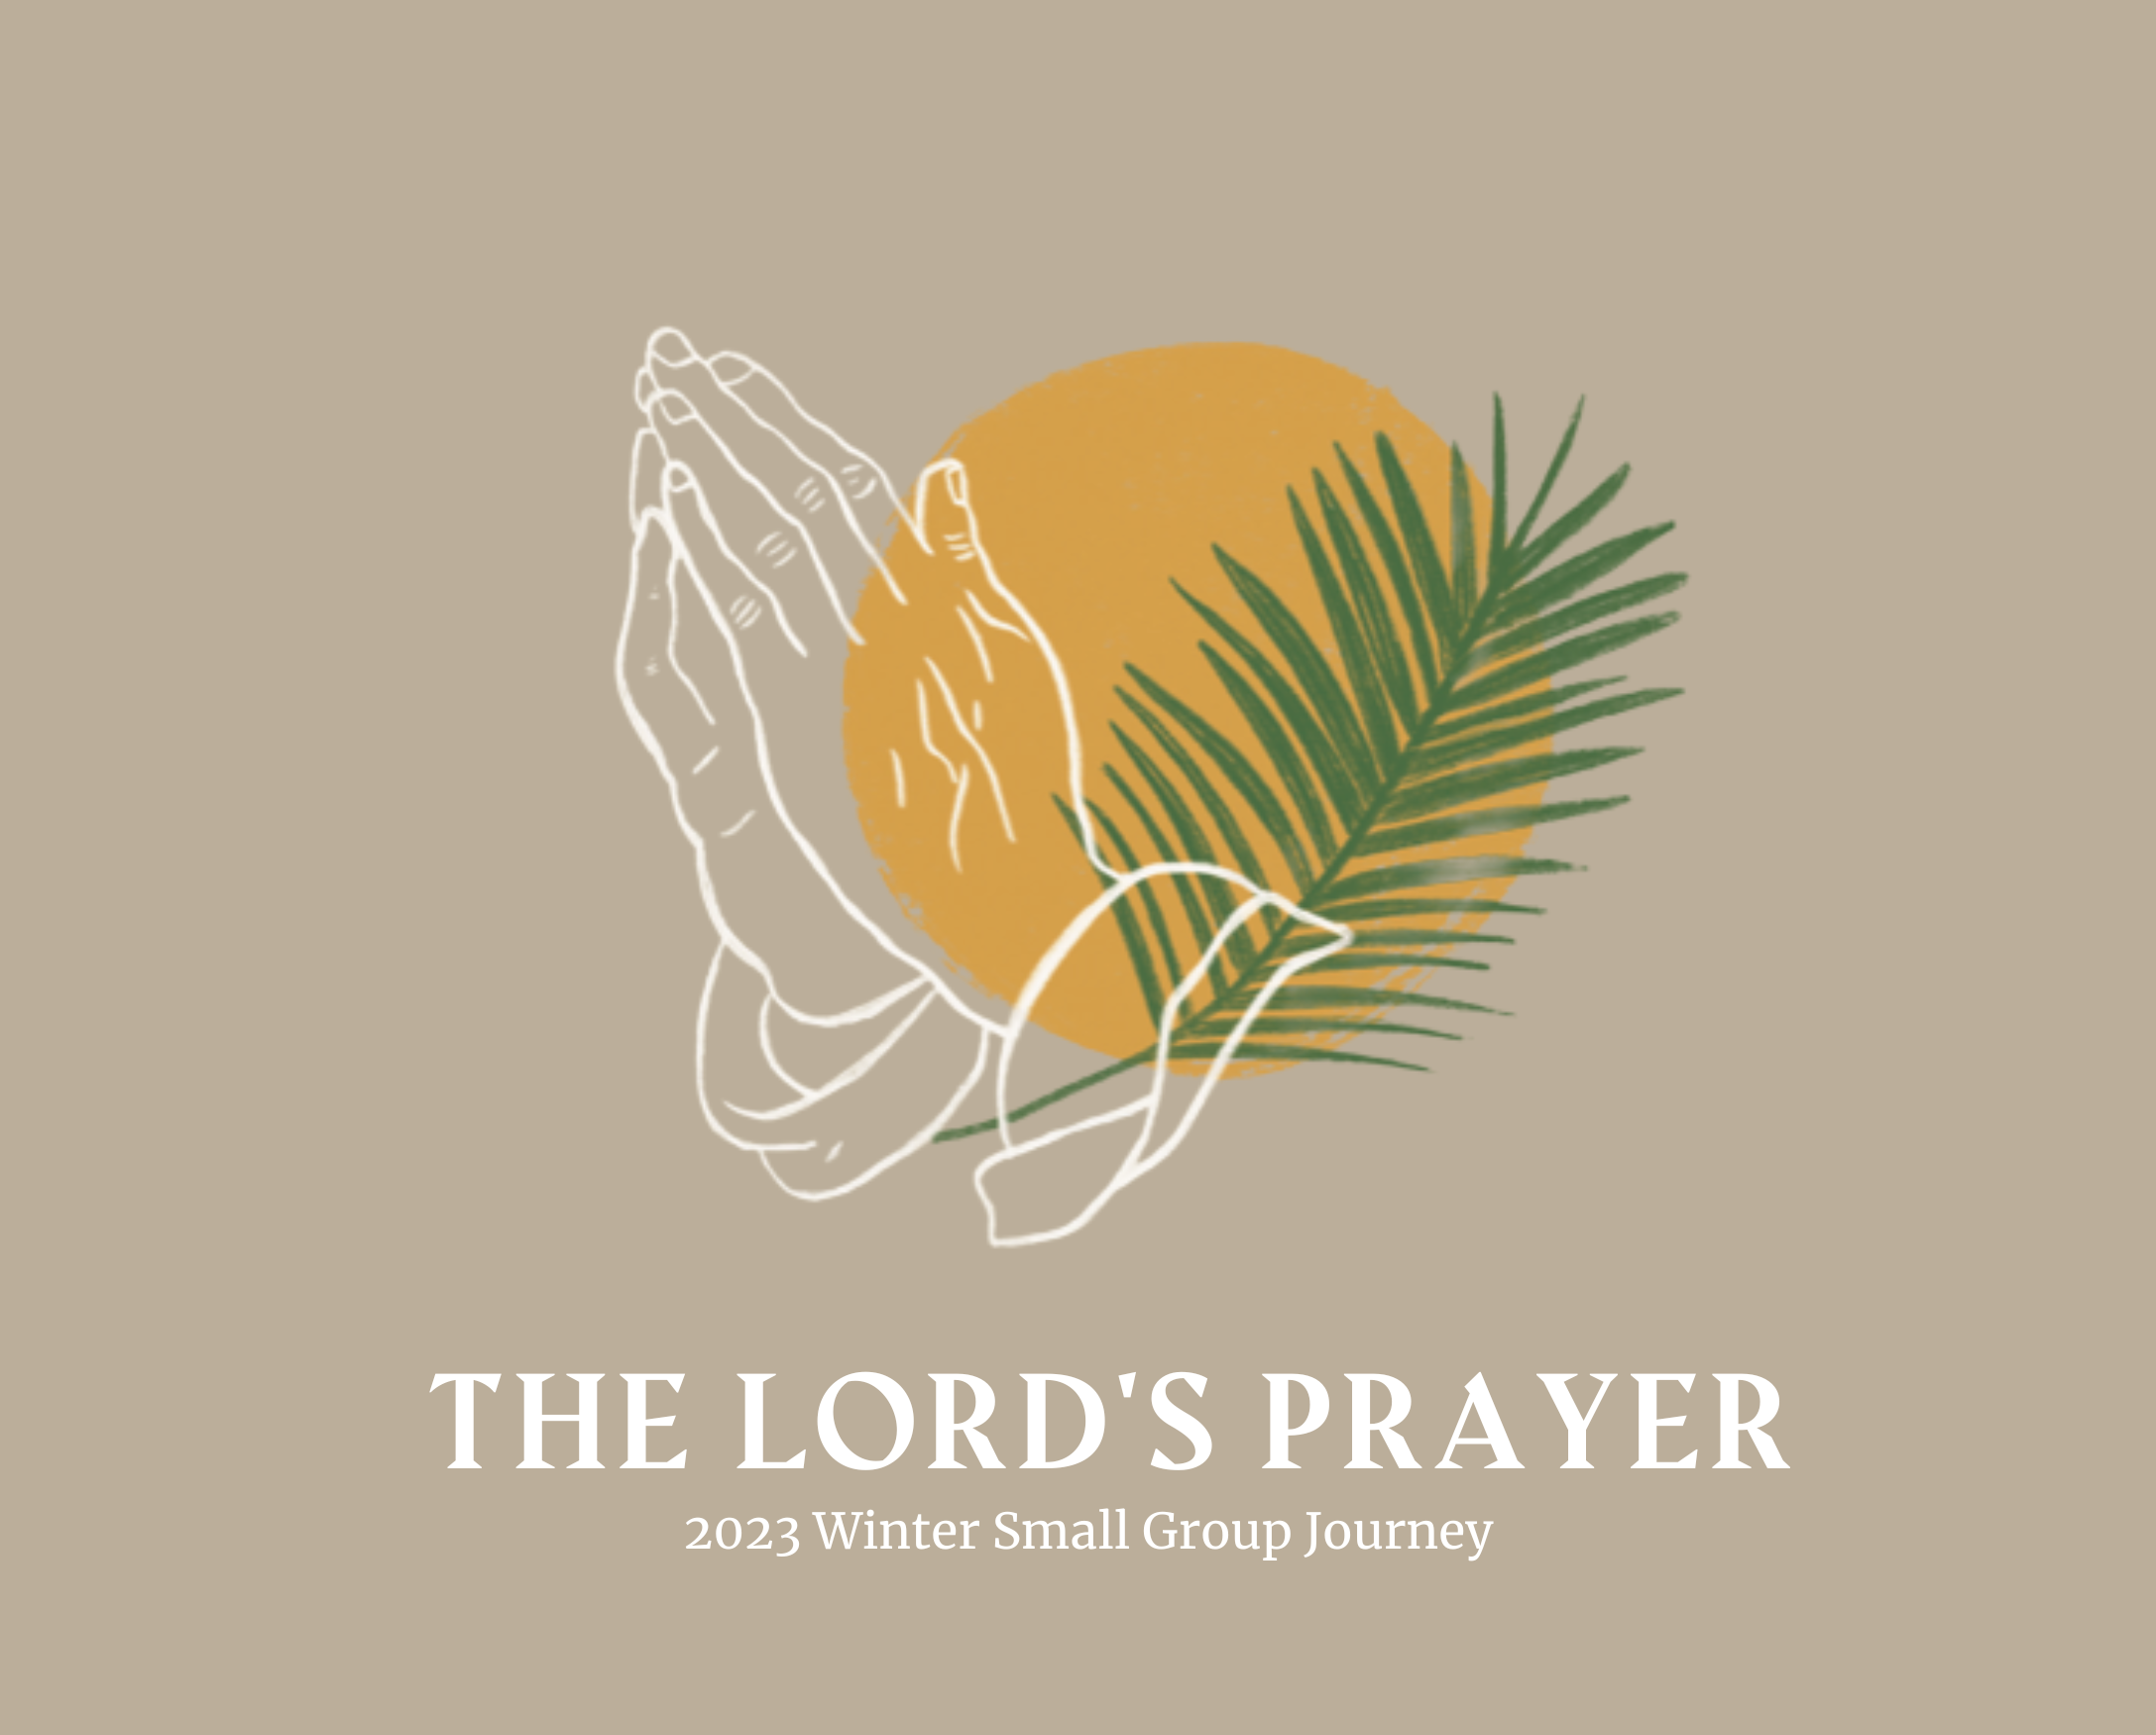 The Lord’s Prayer: Temptation & Evil